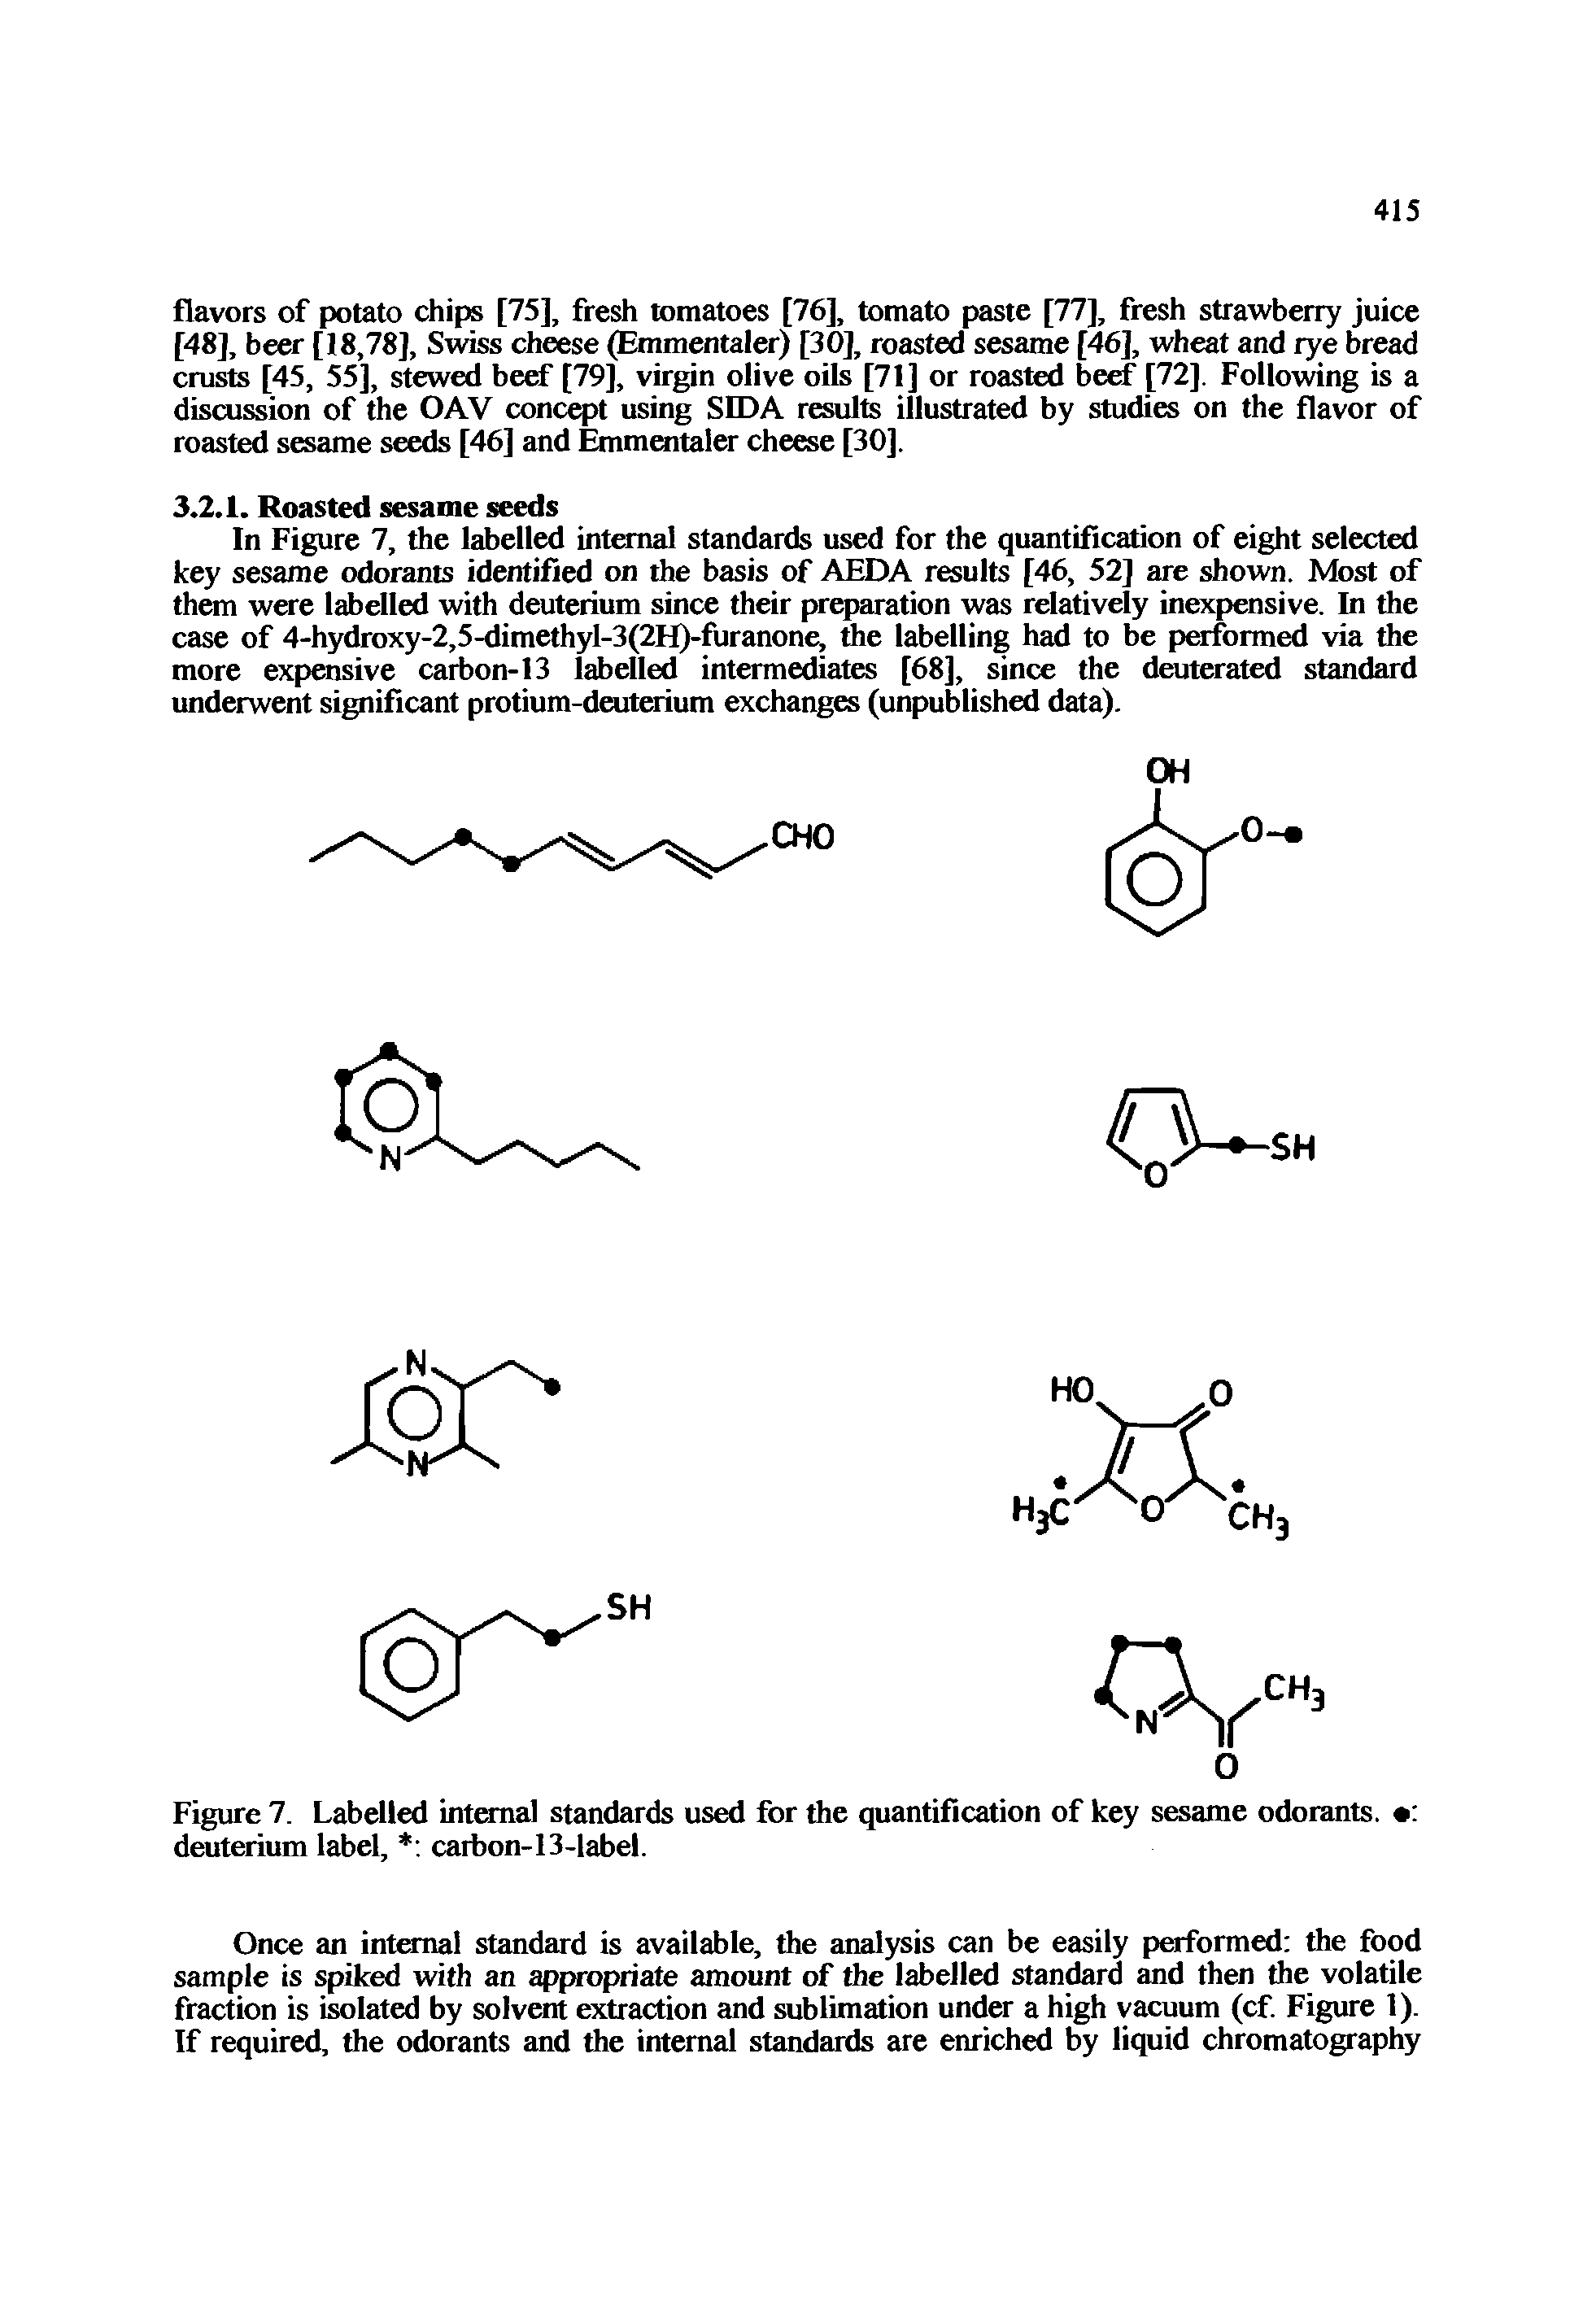 Figure 7. Labelled internal standards used for the quantification of key sesame odorants. deuterium label, carbon-13-label.